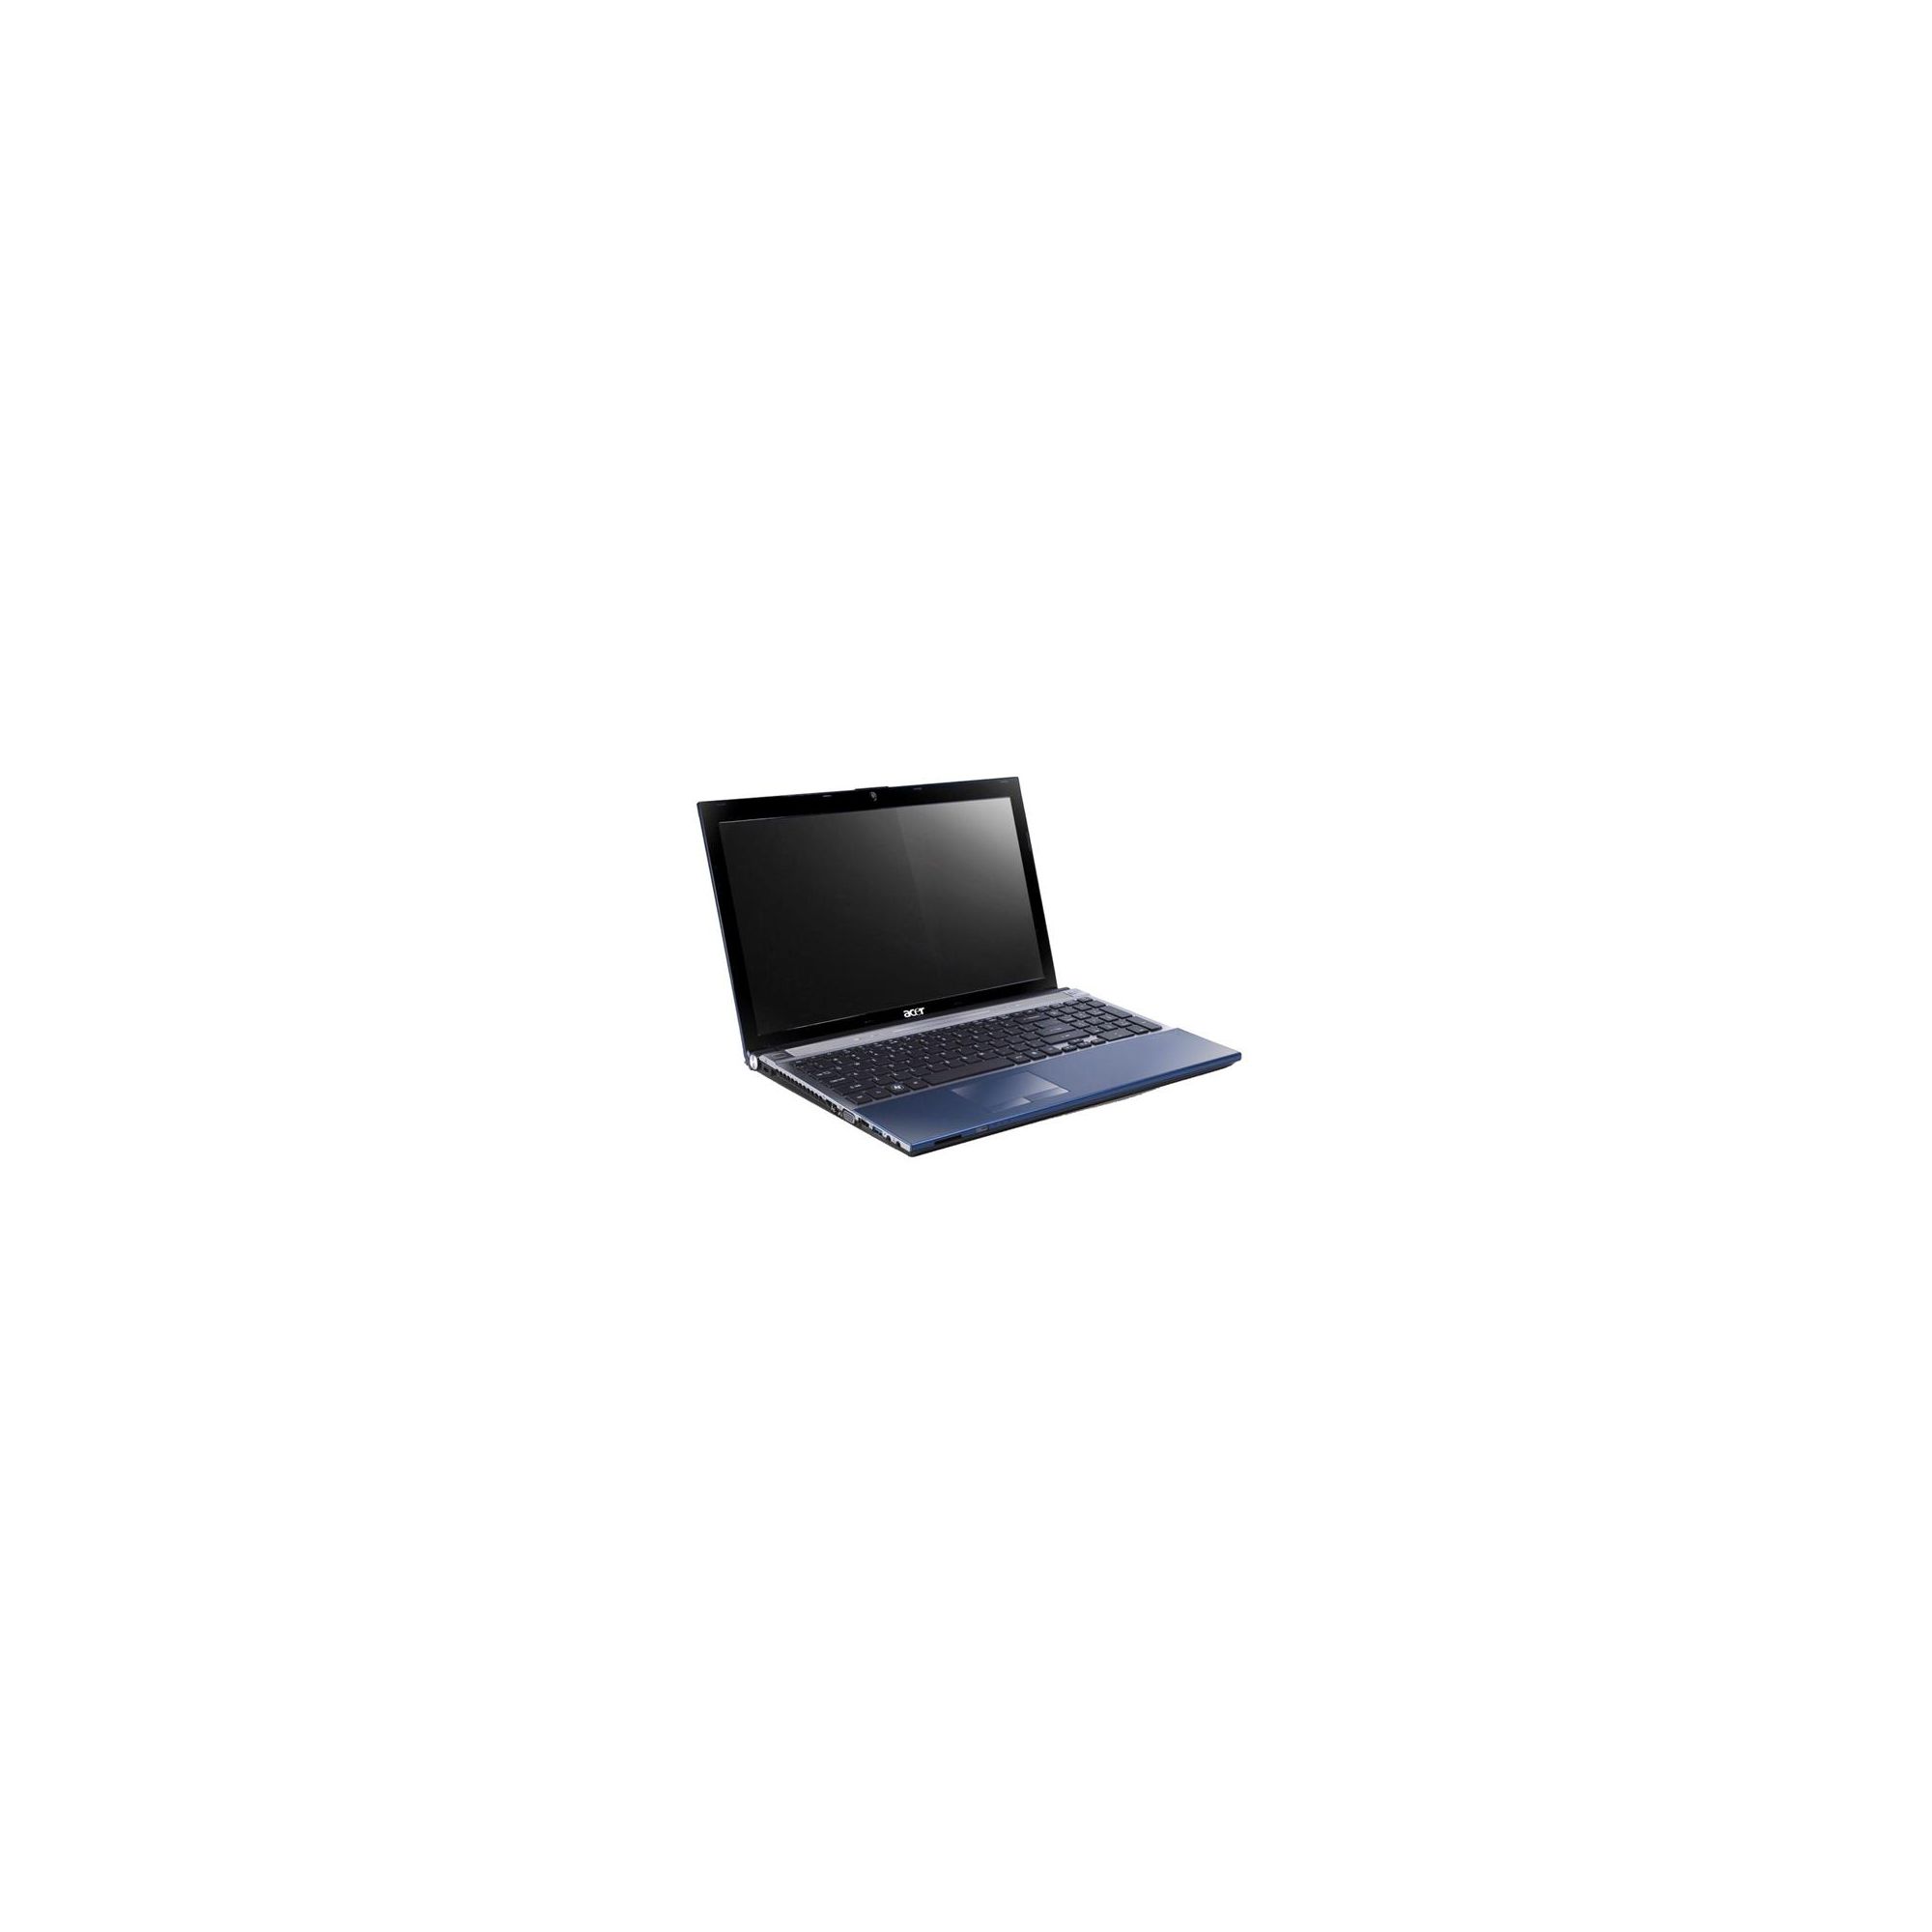 Acer Aspire TimelineX 5830TG- LX.RHJ02.175 15.6 inch Notebook Core i5 (2430M) 2.4GHz 6GB 750GB DVD-SuperMulti DL at Tesco Direct